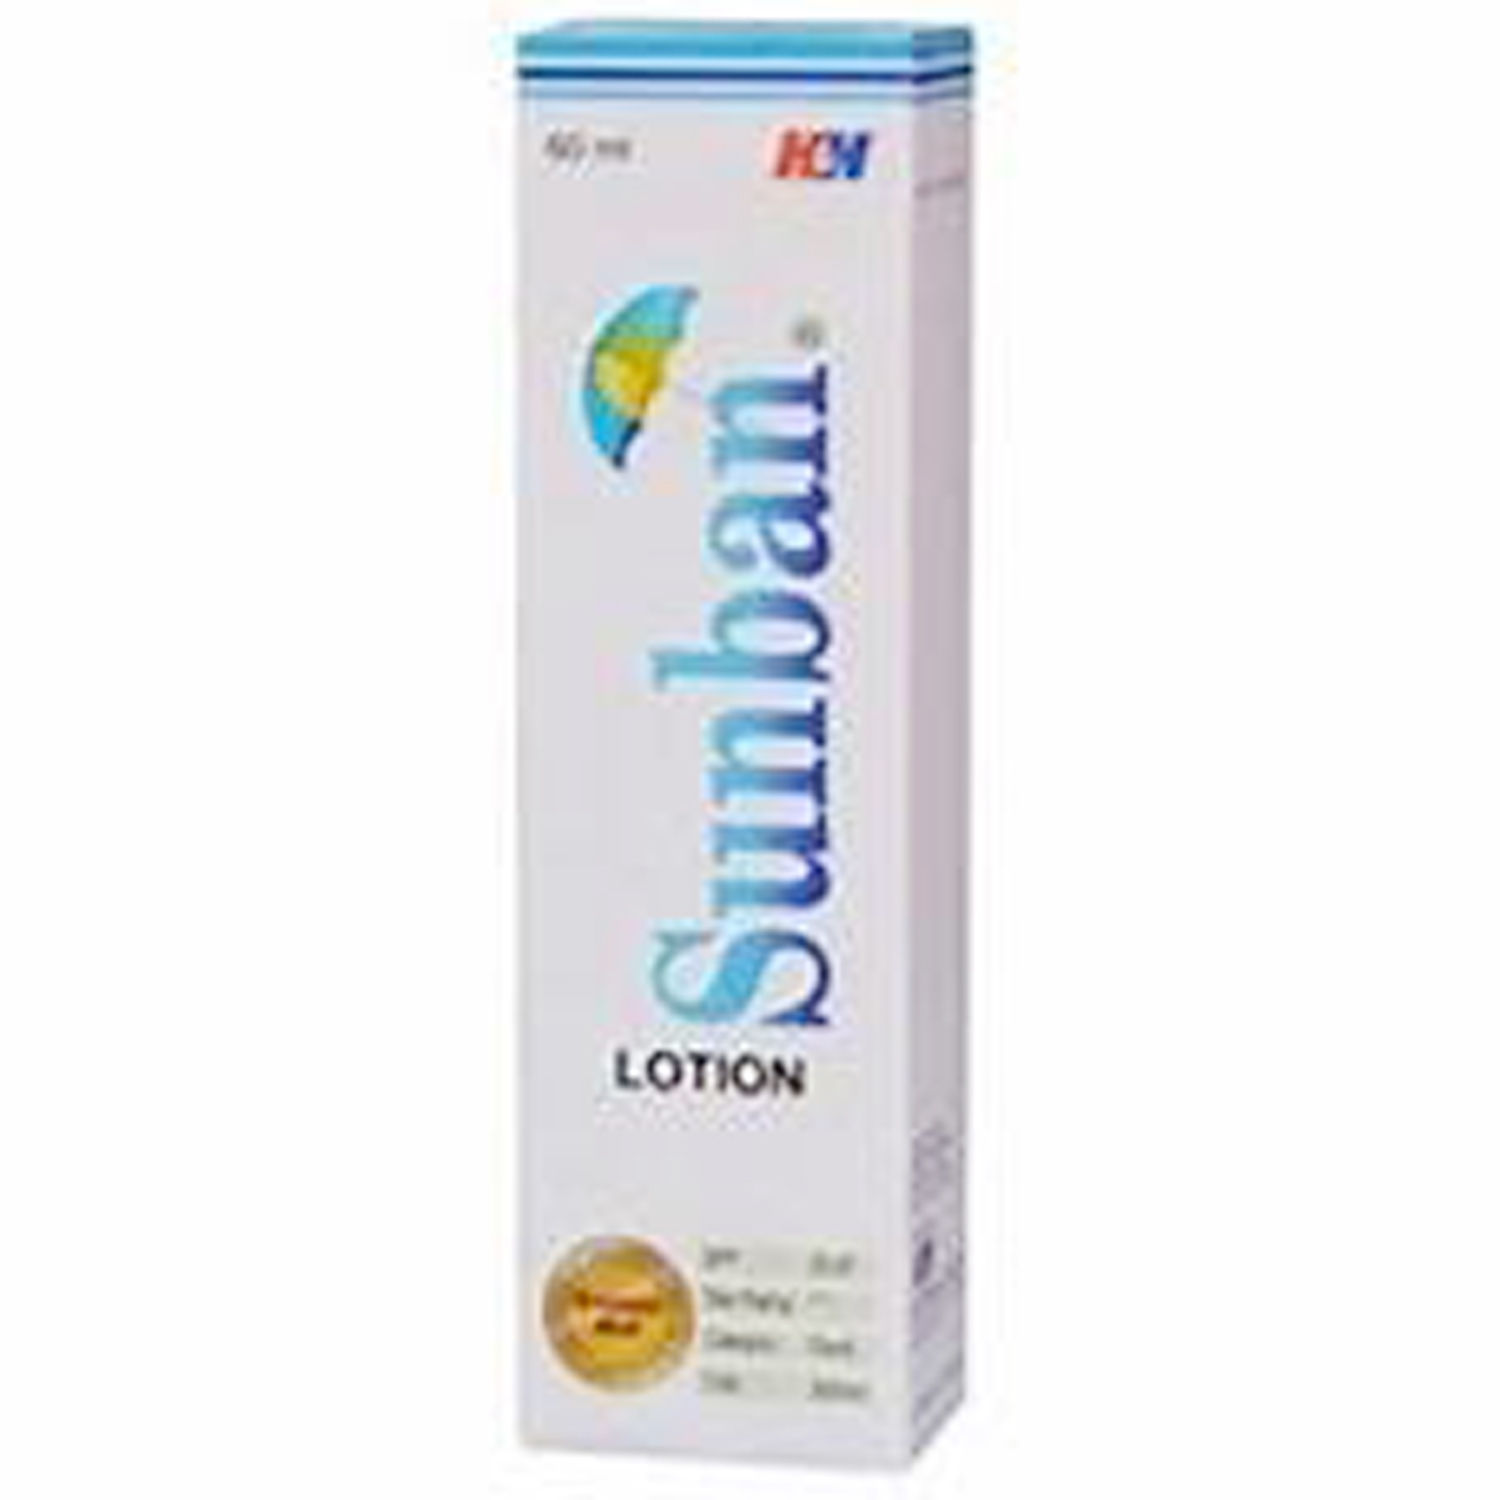 Buy Sunban Lotion, 60 ml Online